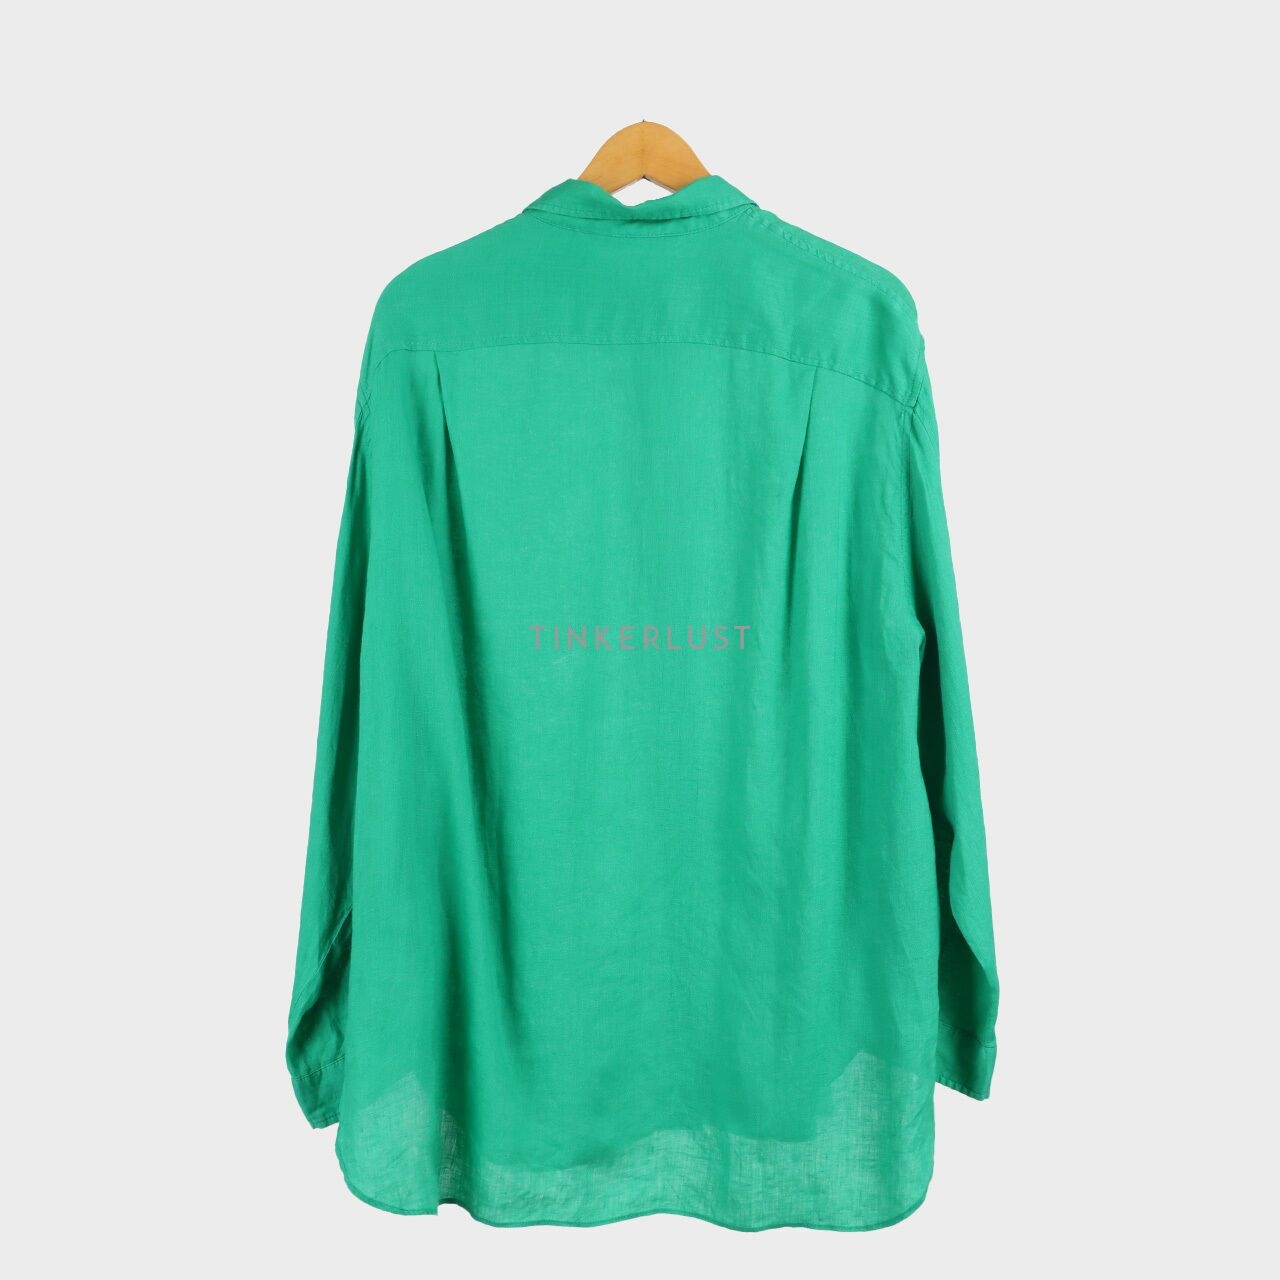 Zara Green Shirt